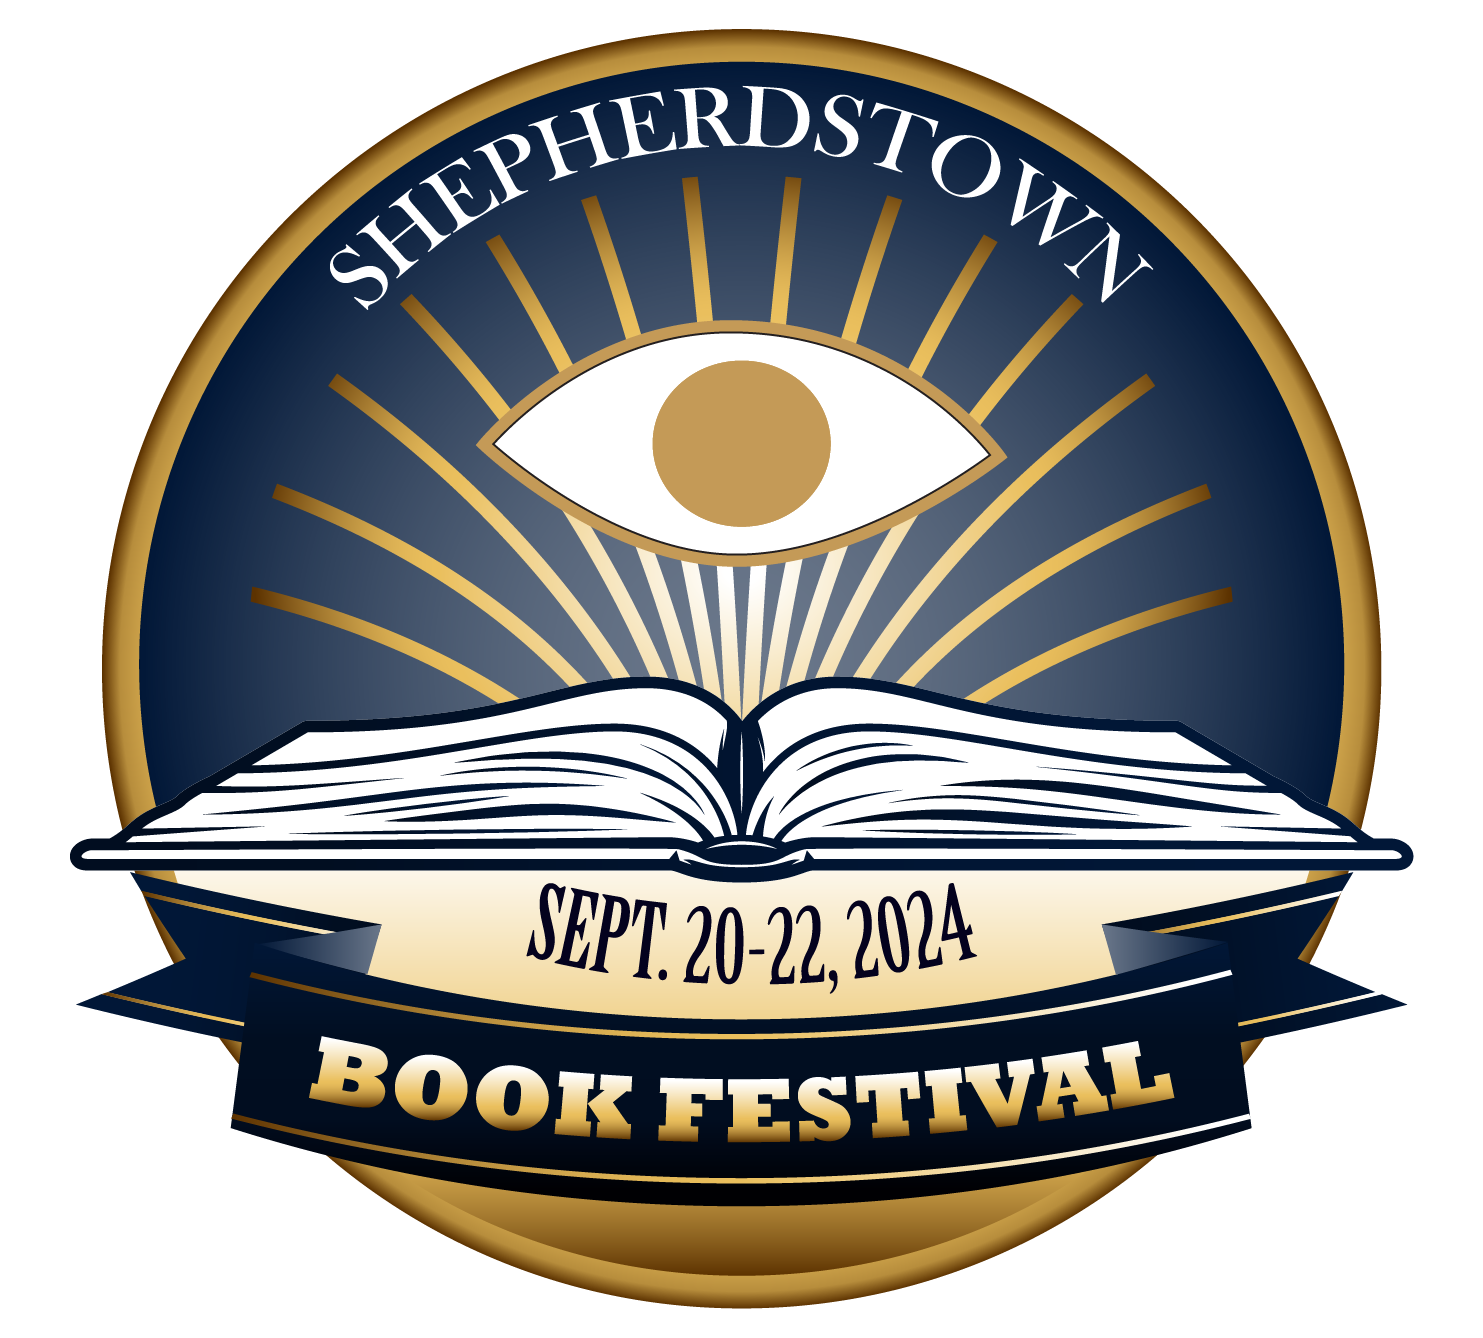 Shepherdstown Book Festival